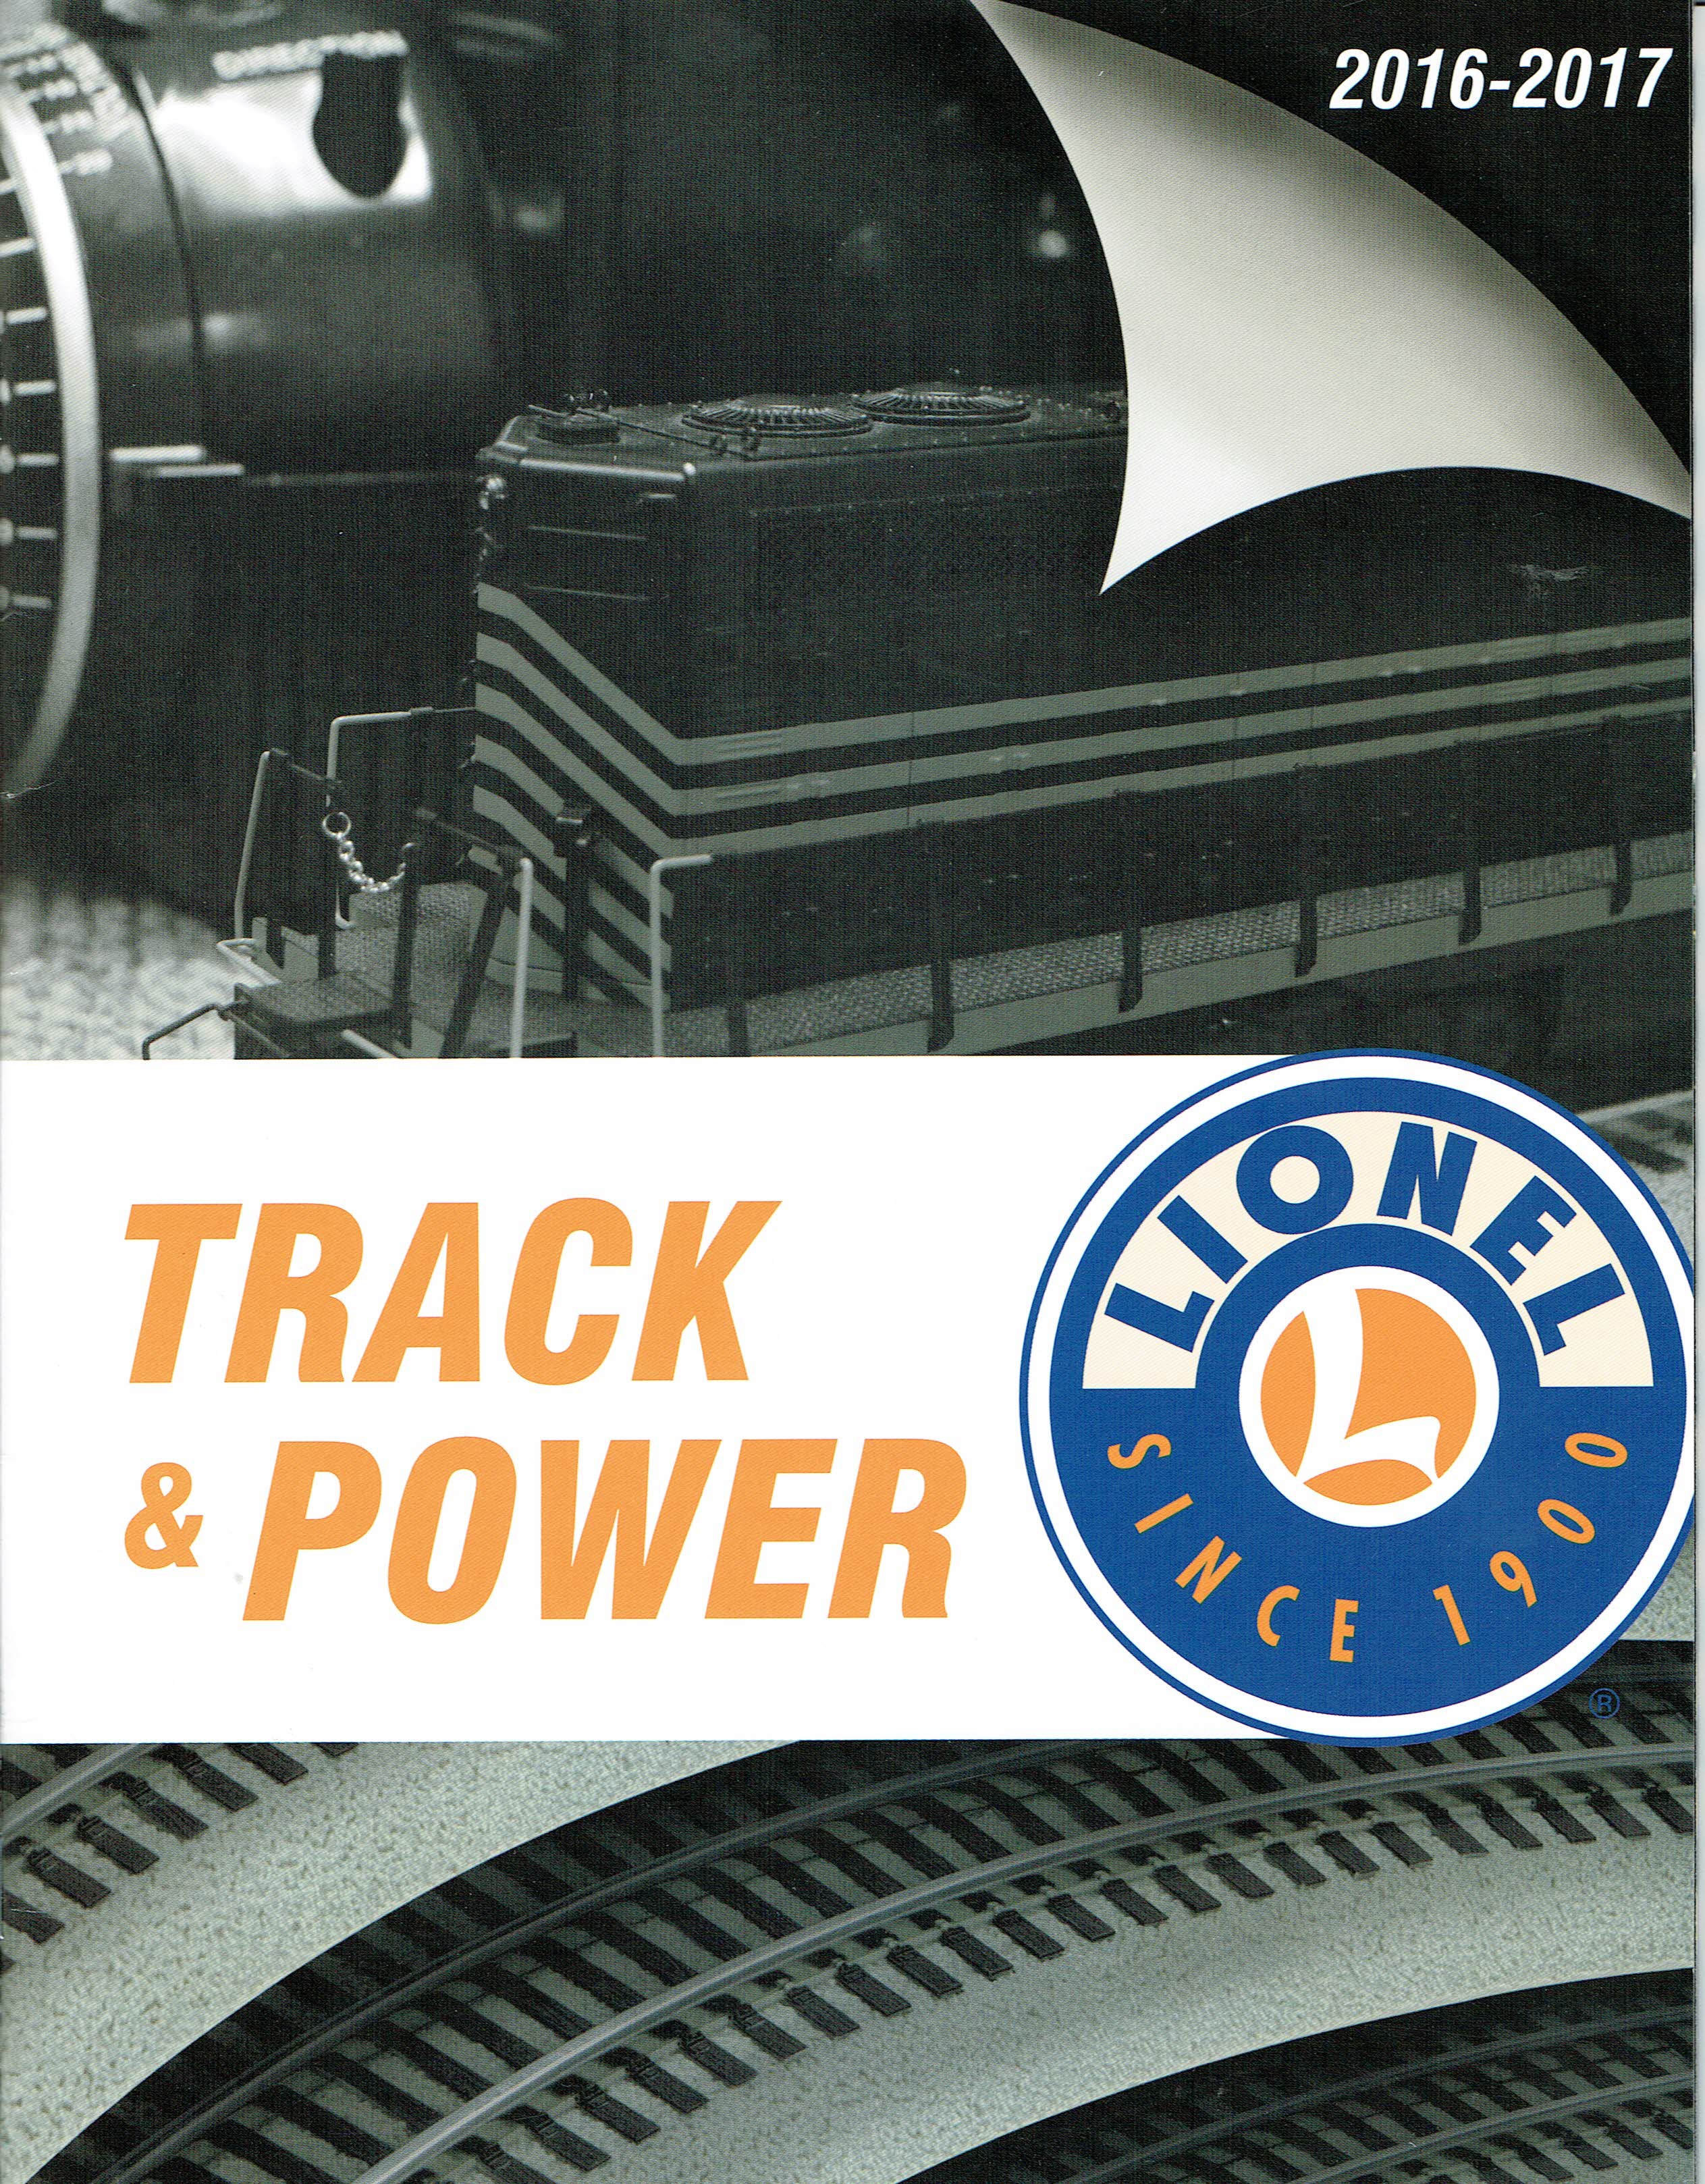 Lionel 2016-2017 Track & Power Catalog image